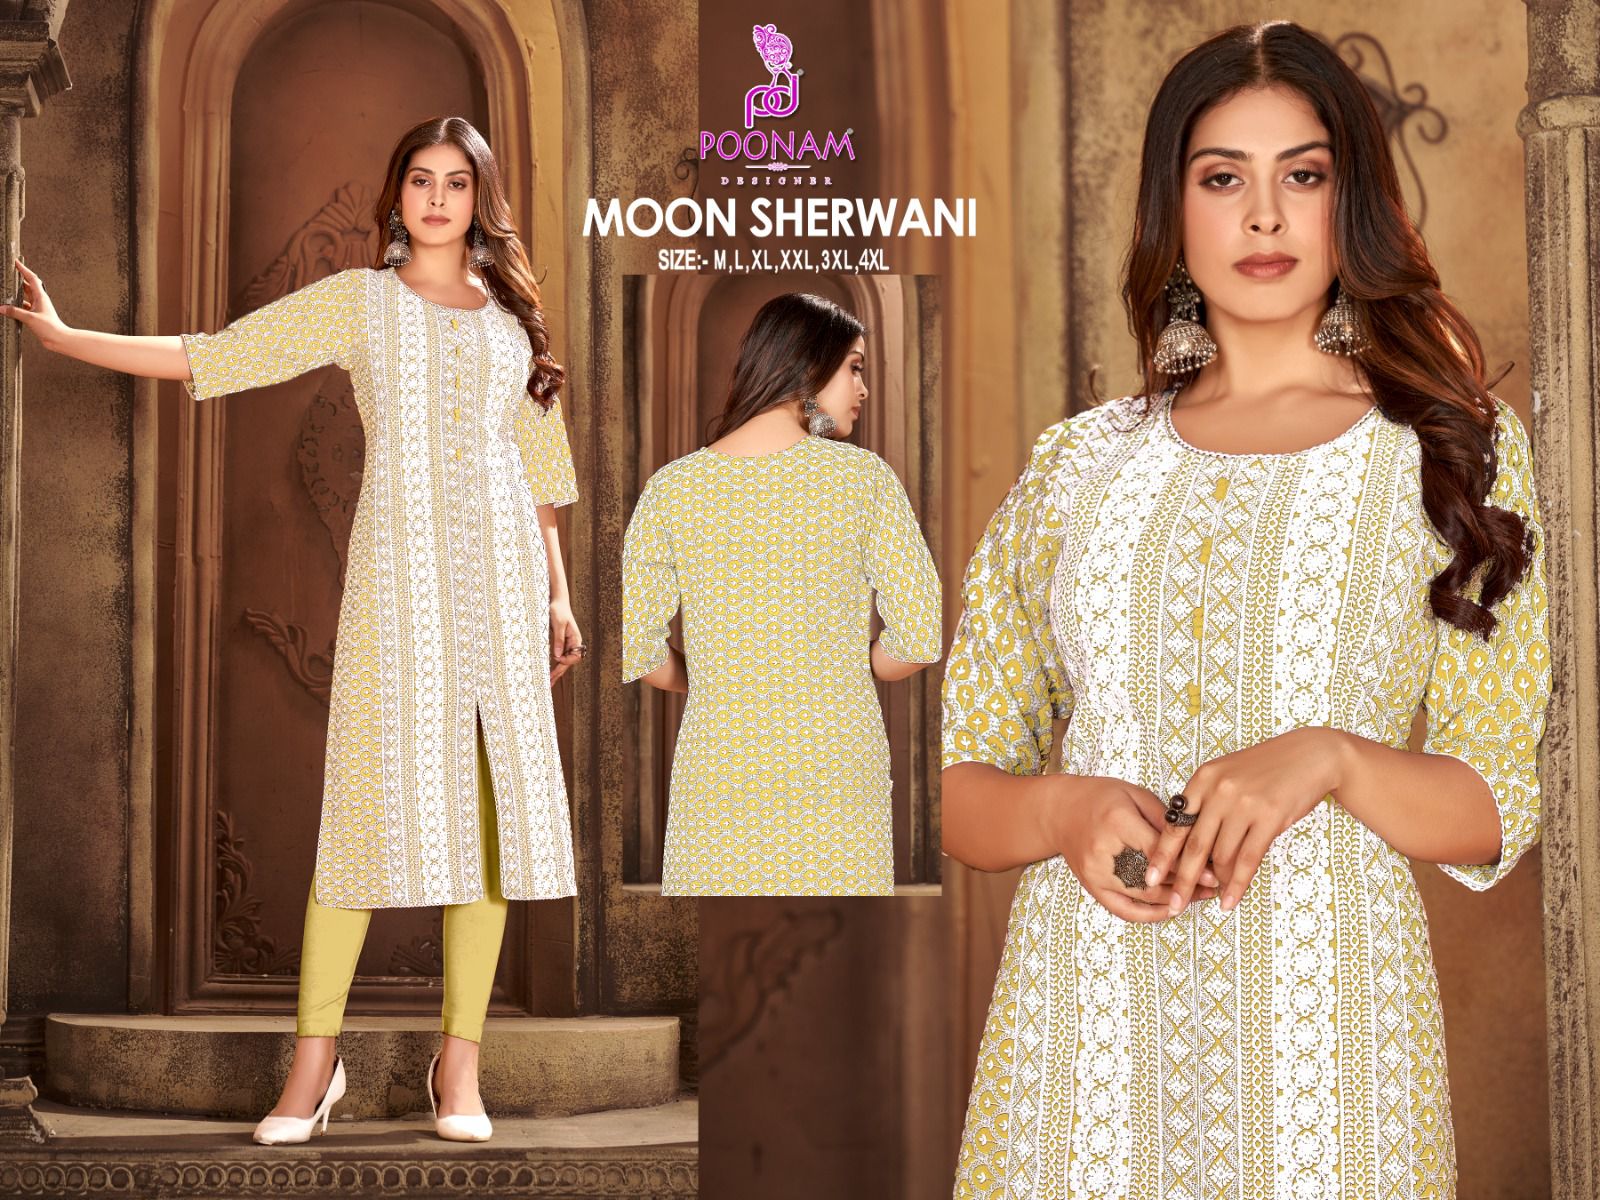 Poonam Designer Moon Sherwani 1007